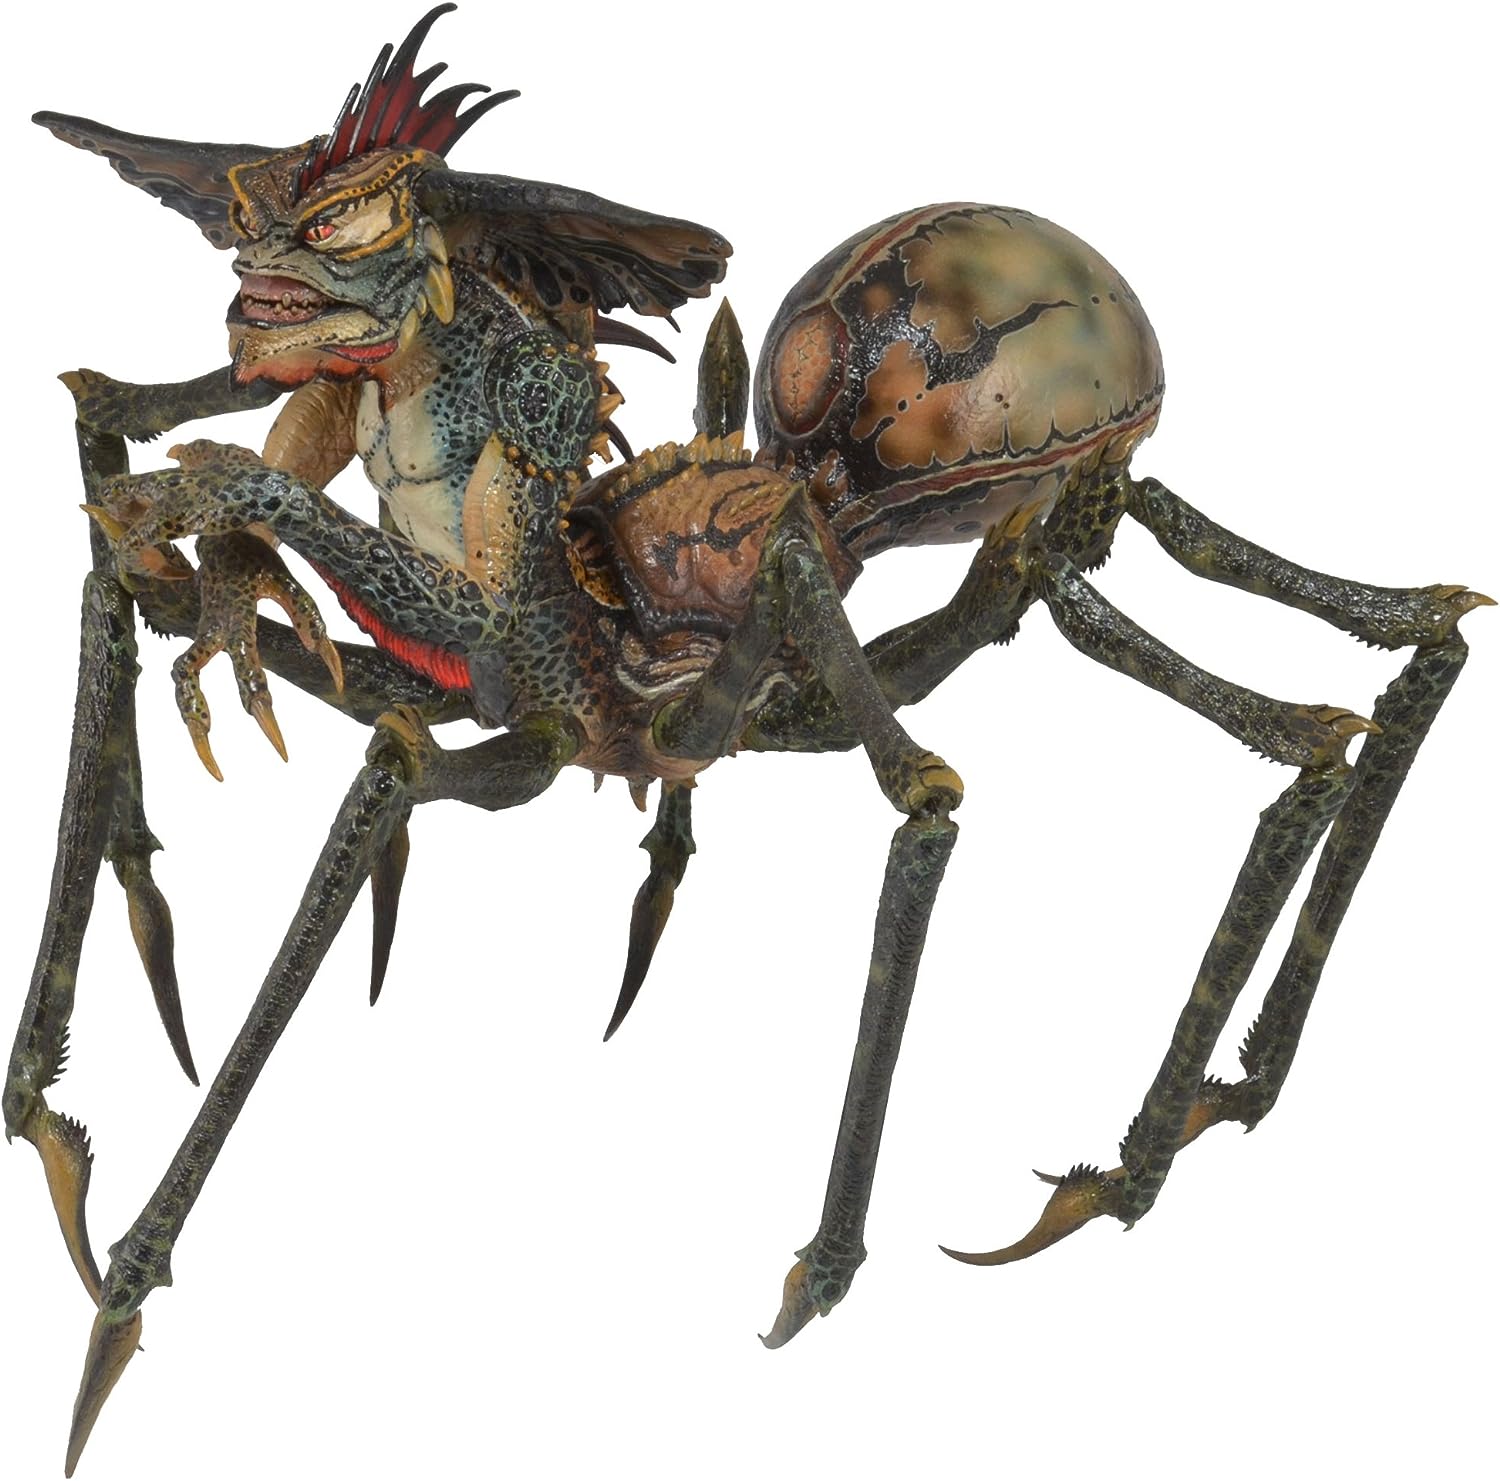 Neca Gremlins 2 Deluxe Action Figure Boxed Spider (Reissue)